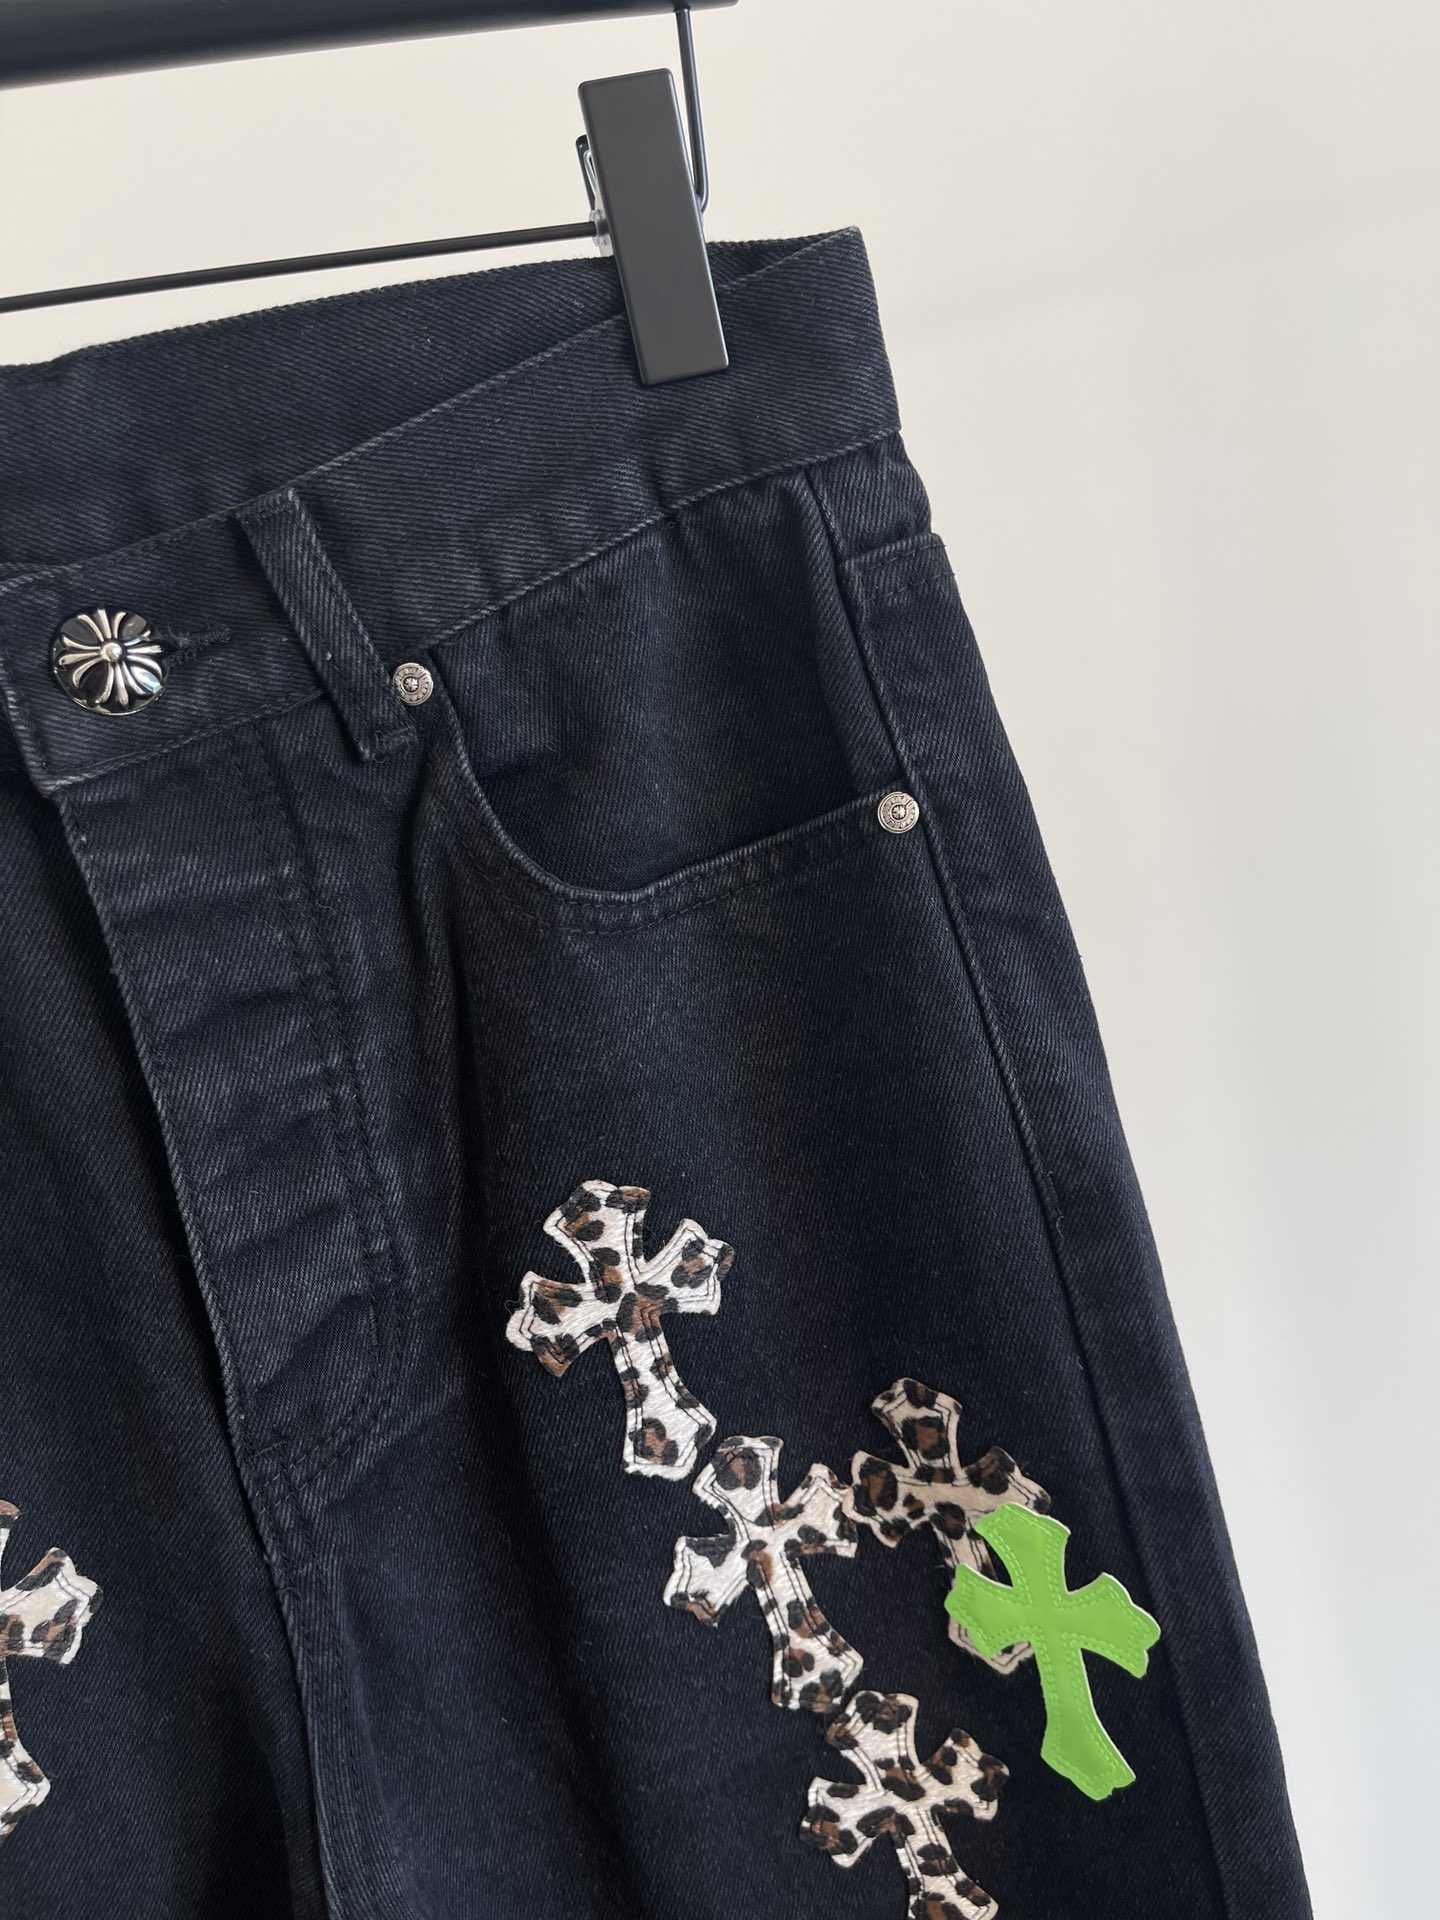 Replica Chrome Hearts Black Denim Jeans Green Leopard Crosses Size 33 $6,250 Available in-store & online | Instagram